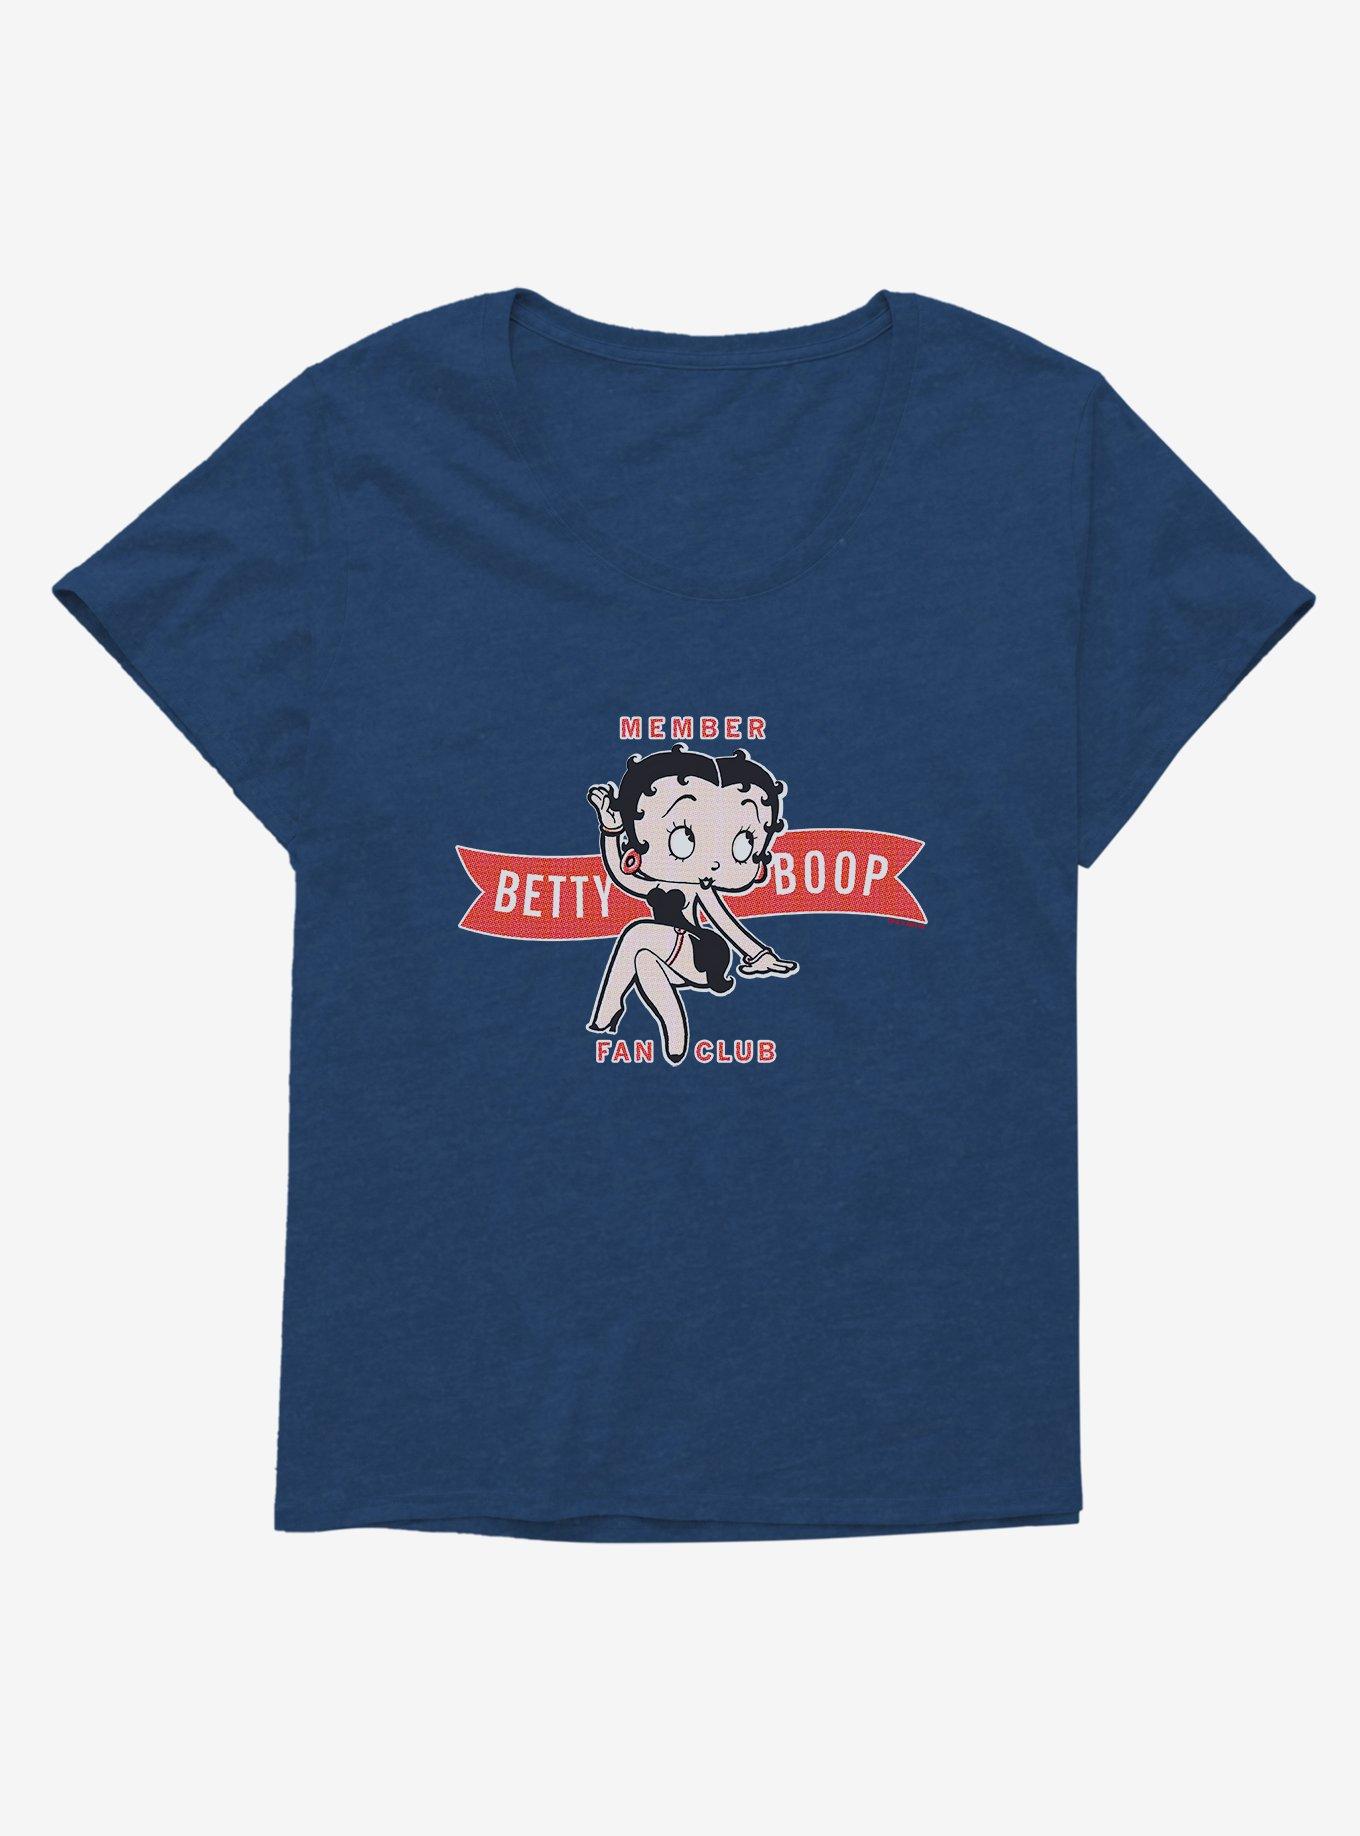 Betty Boop Fan Club Member Girls T-Shirt Plus